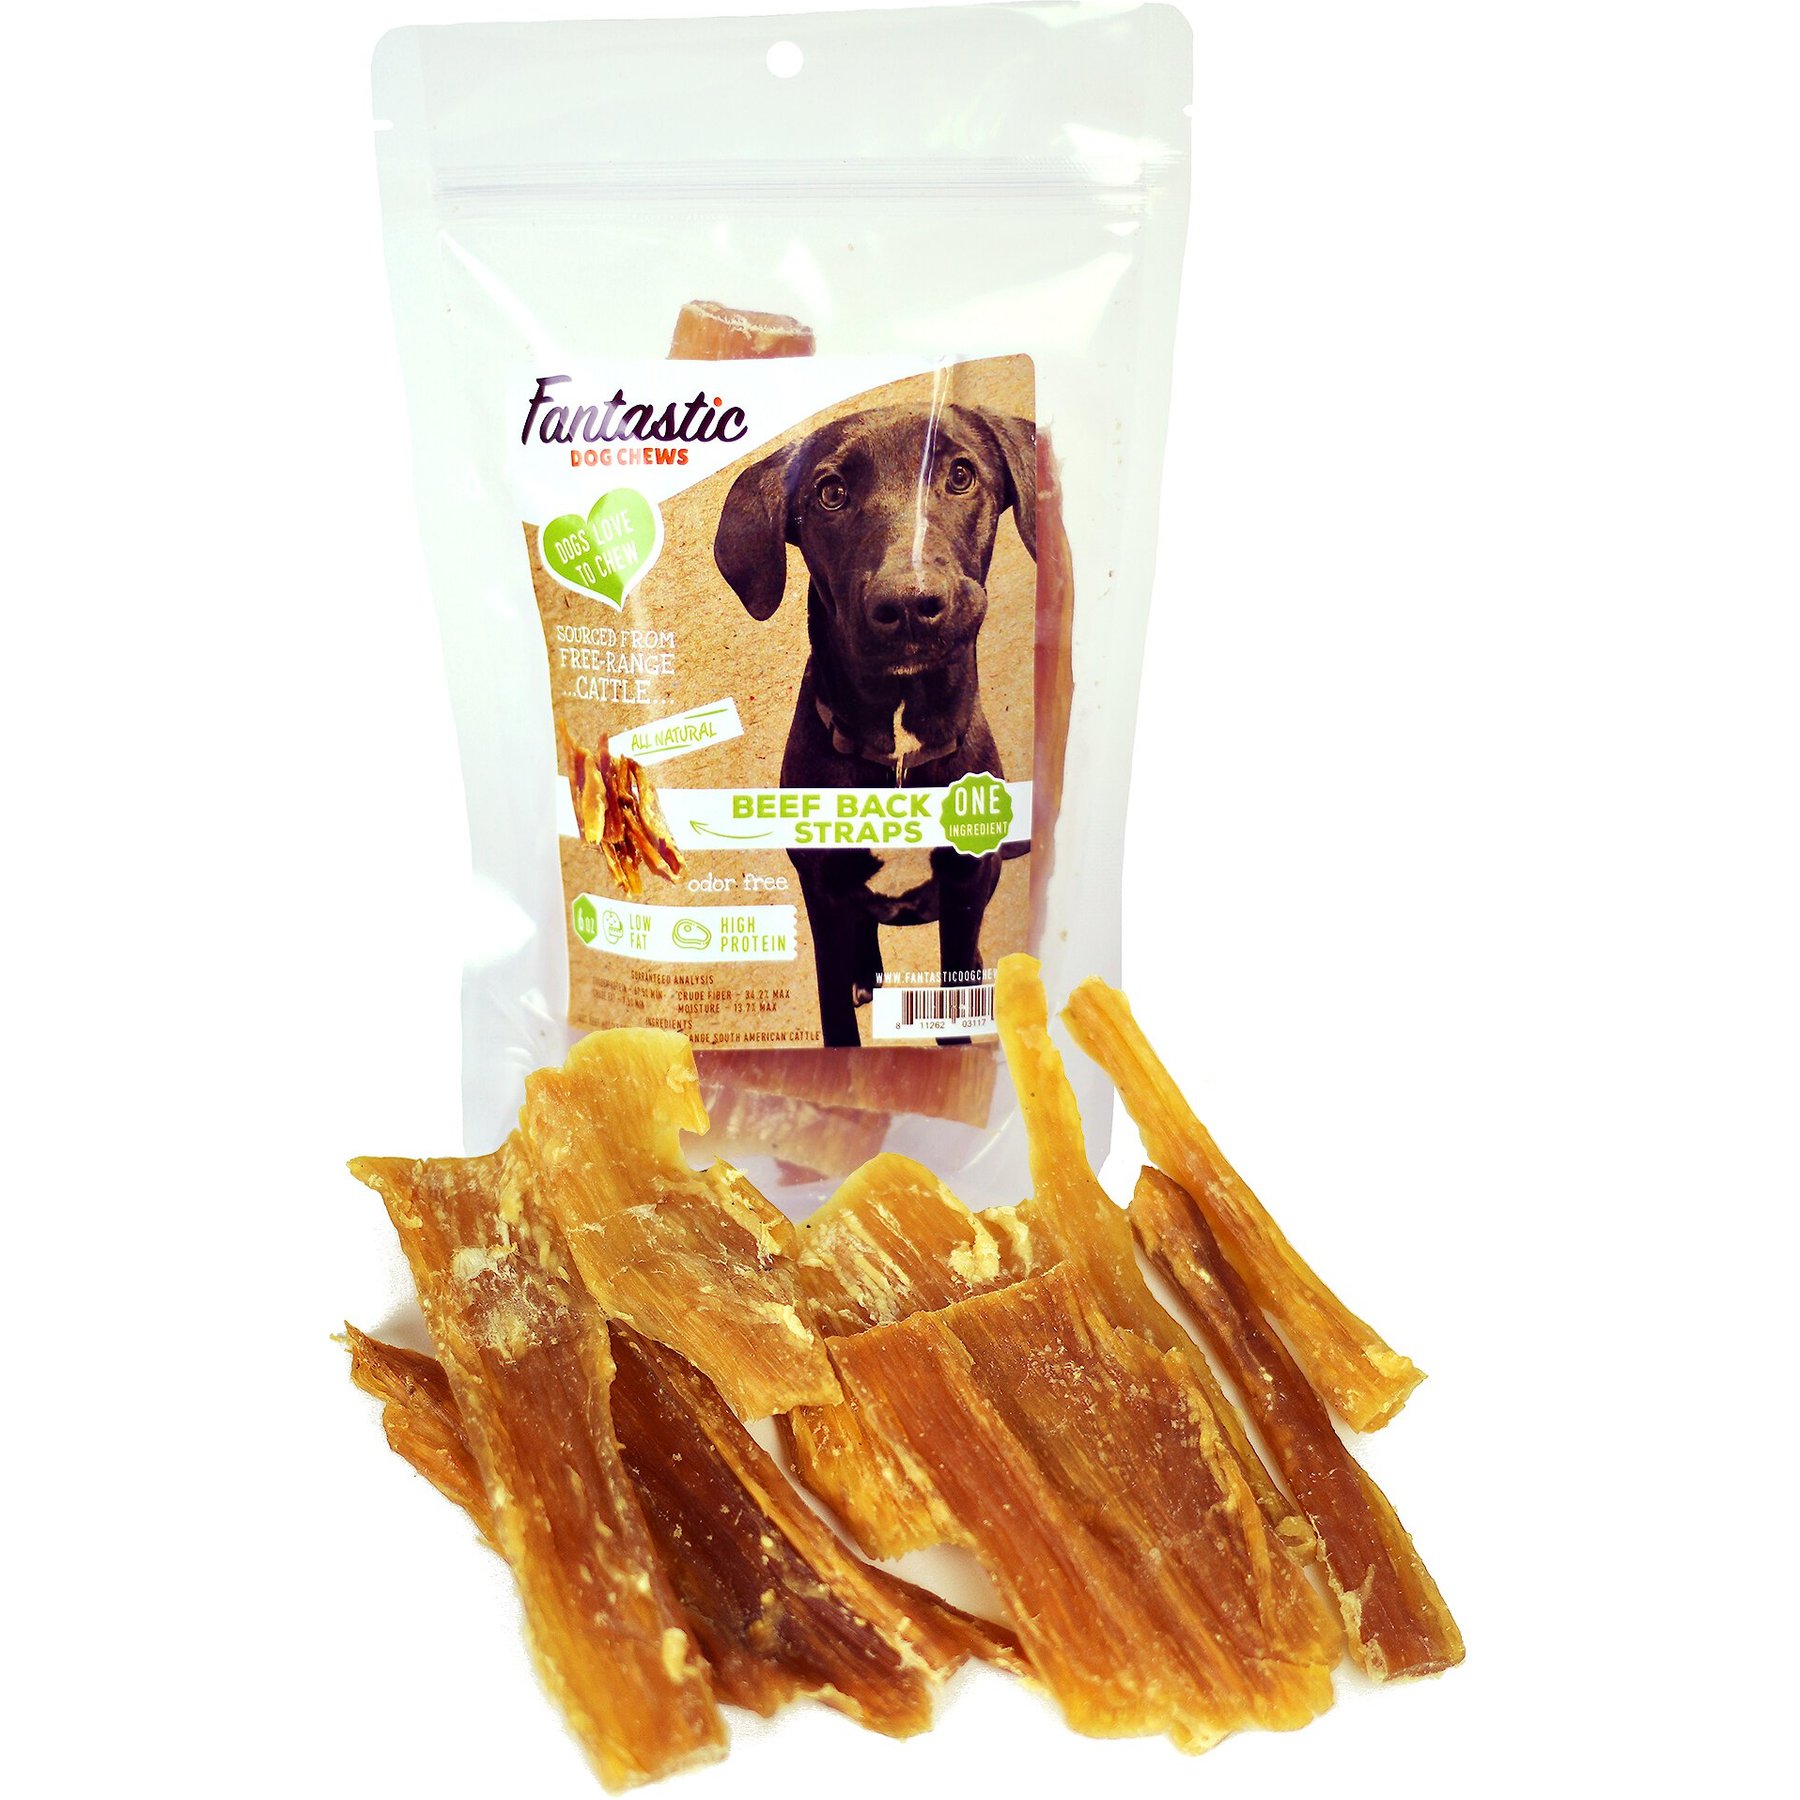 Fantastic Dog Chews 95% Venison Bites Dog Treats, 6-oz Bag